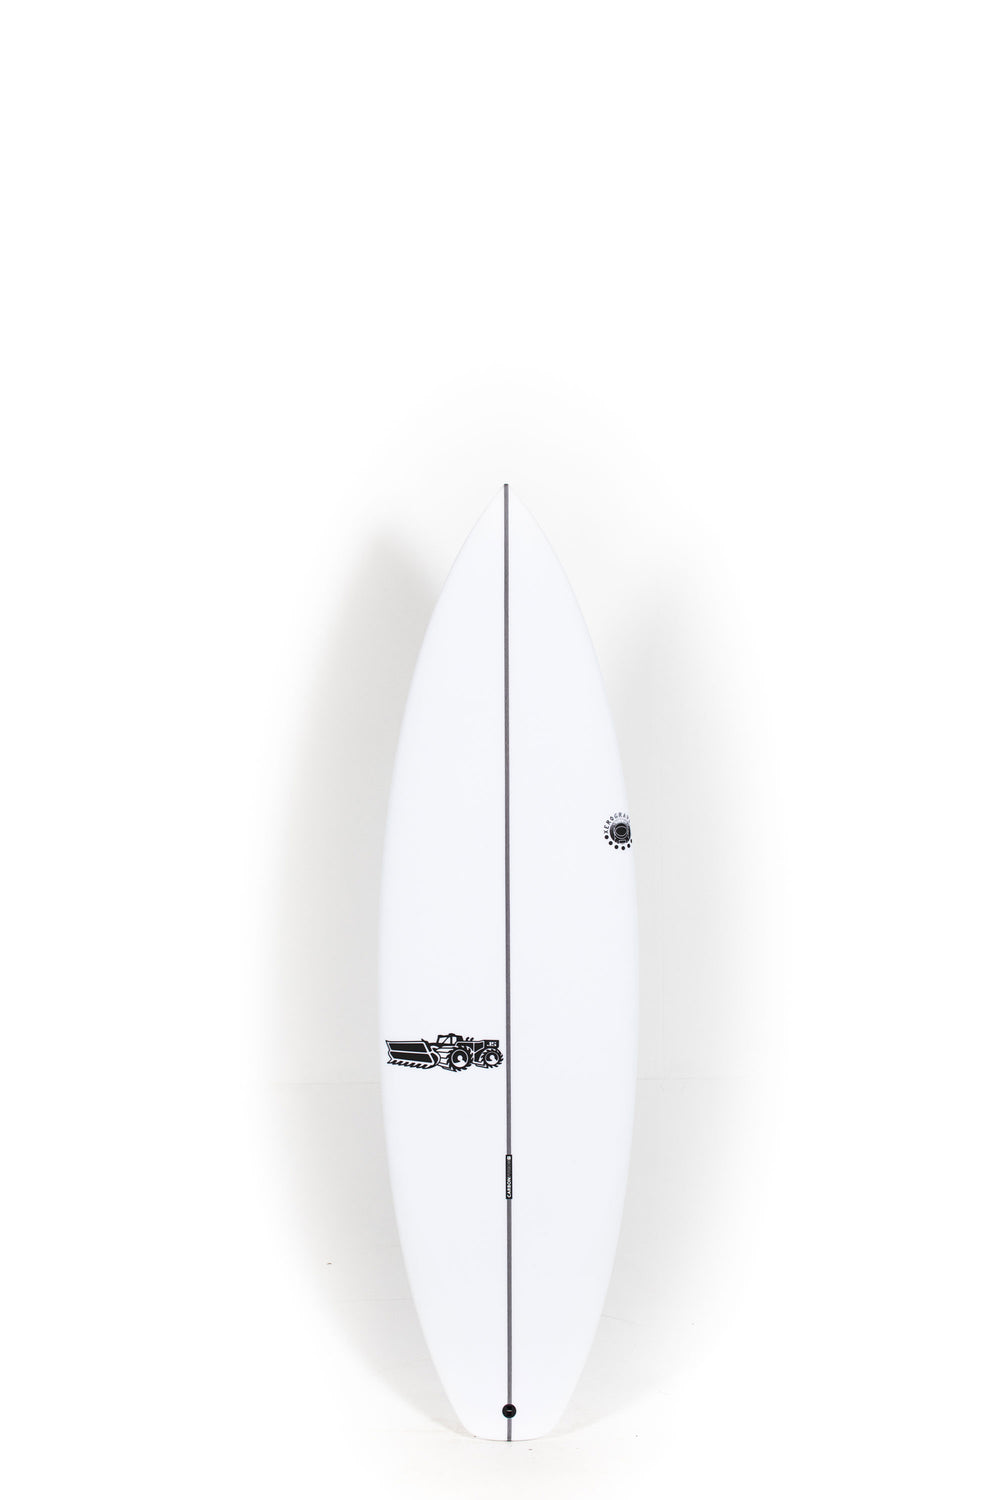 Pukas Surf Shop - JS Surfboards - XERO GRAVITY - 5'10